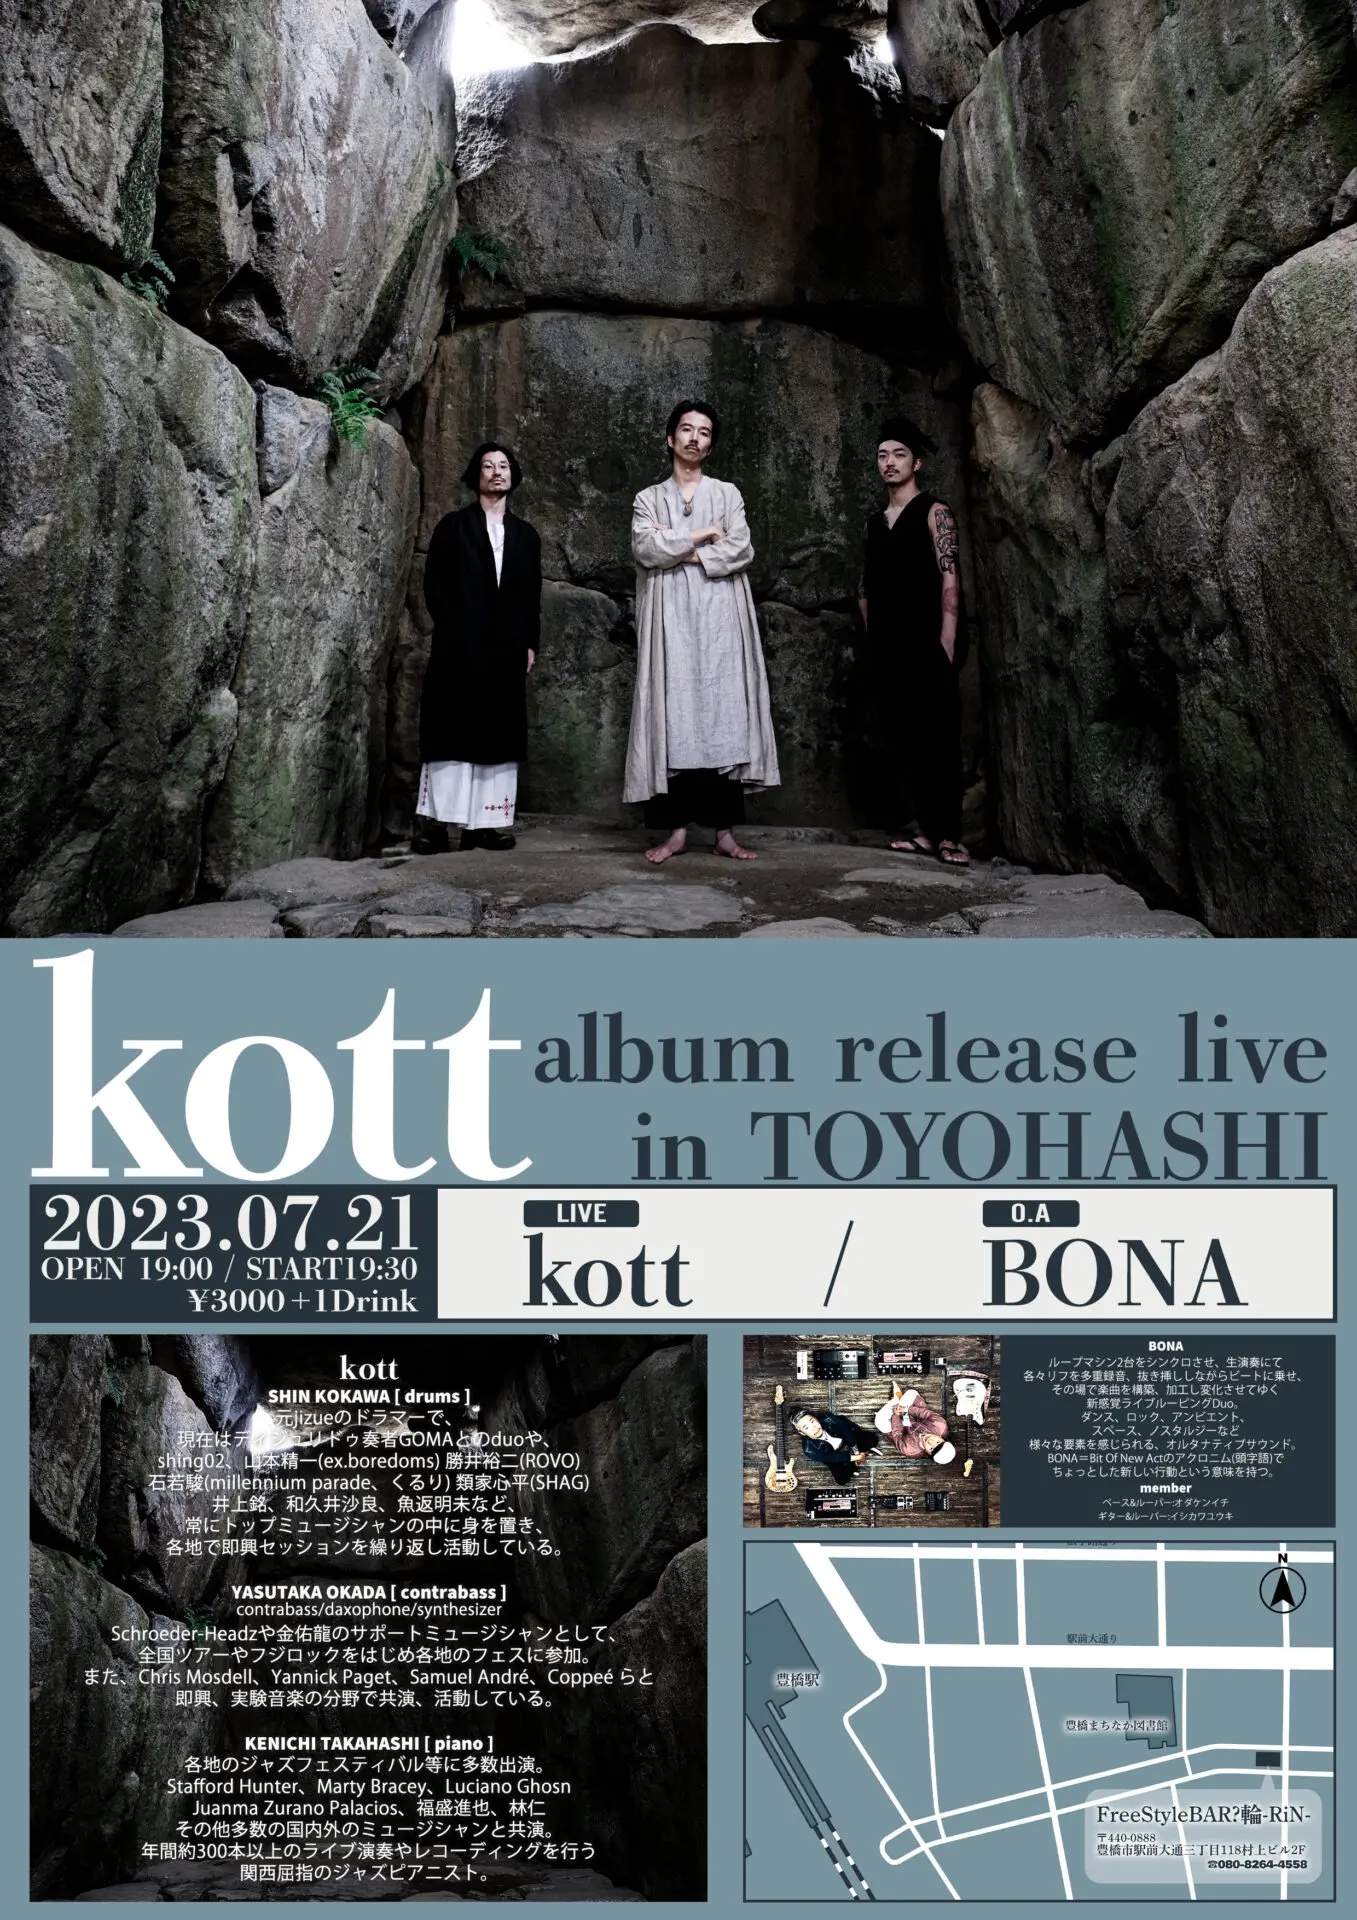 kott album release live in TOYOHASHI